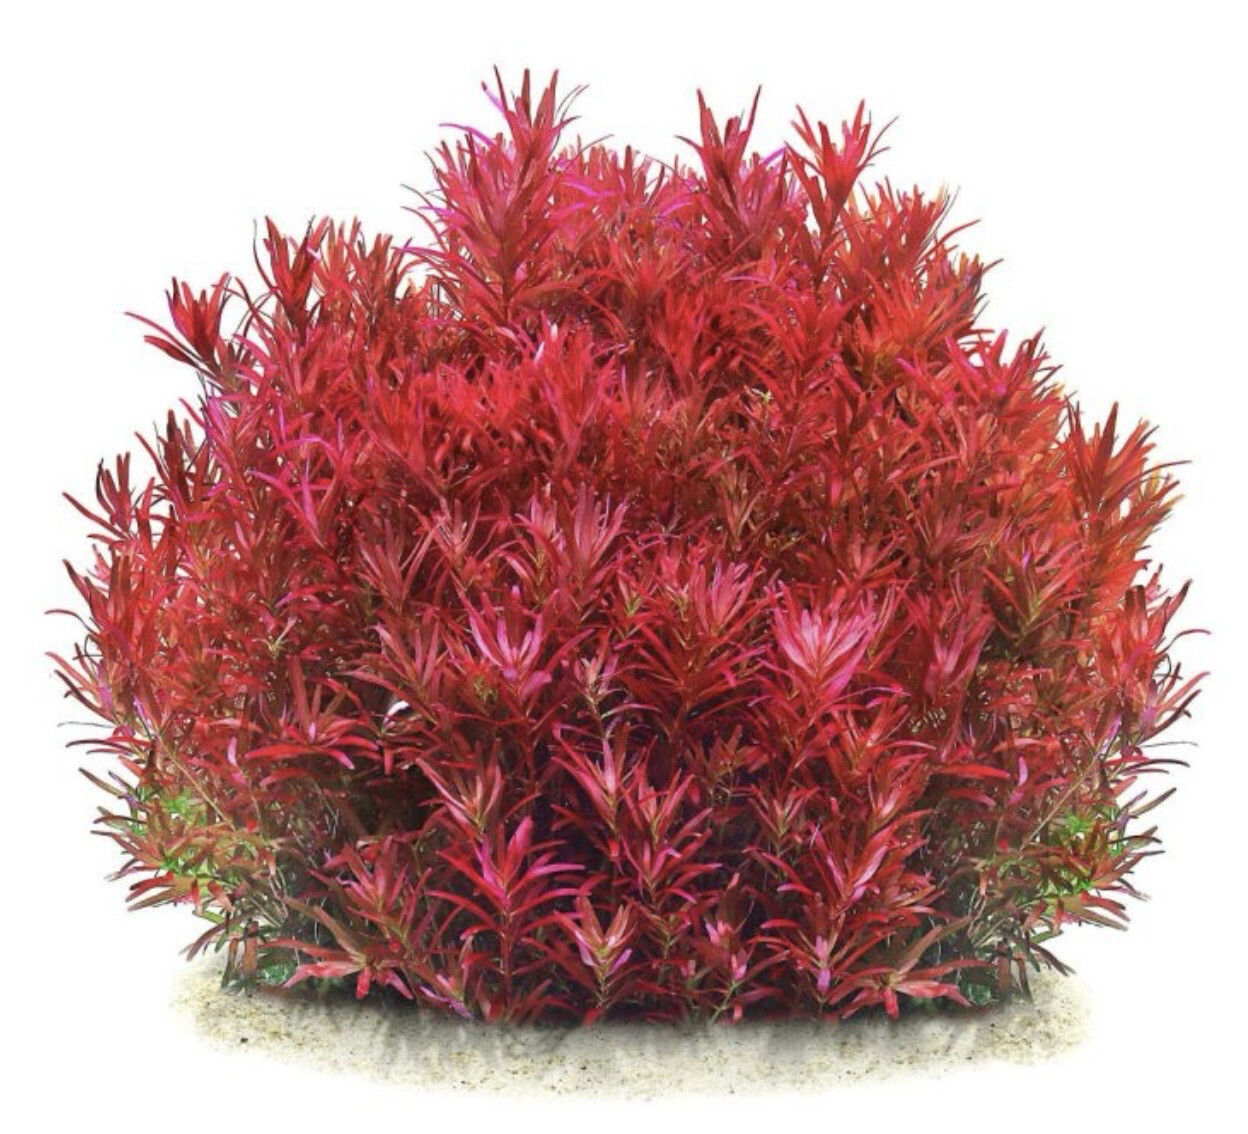 Rotala rotundifolia "Blood red" maceta